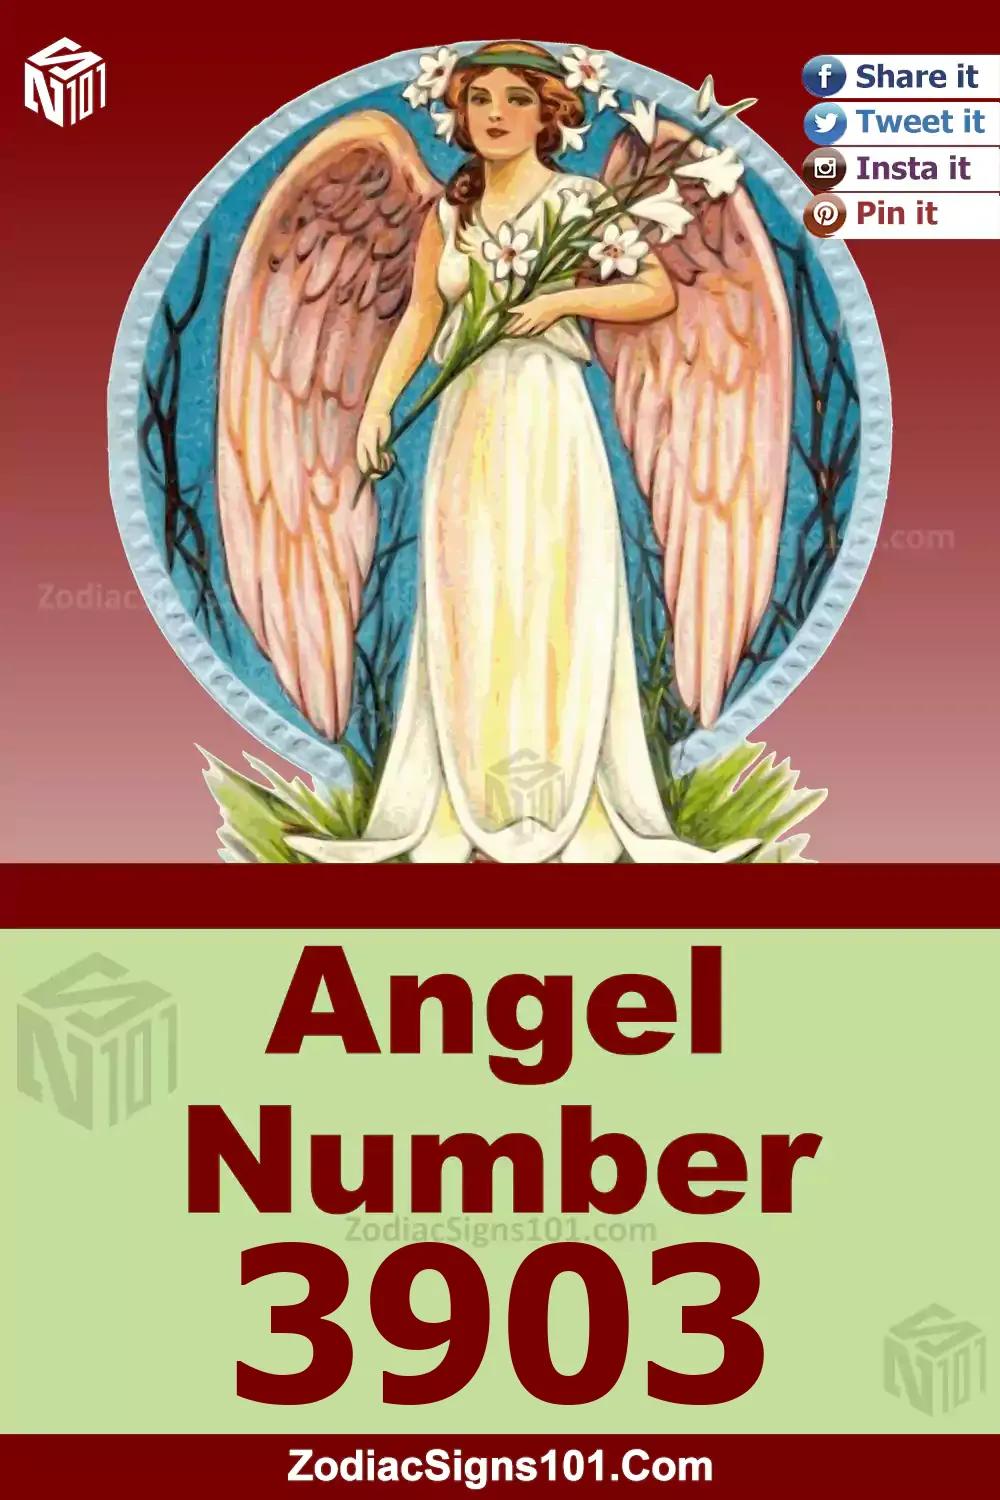 3903-Angel-Number-Meaning.jpg